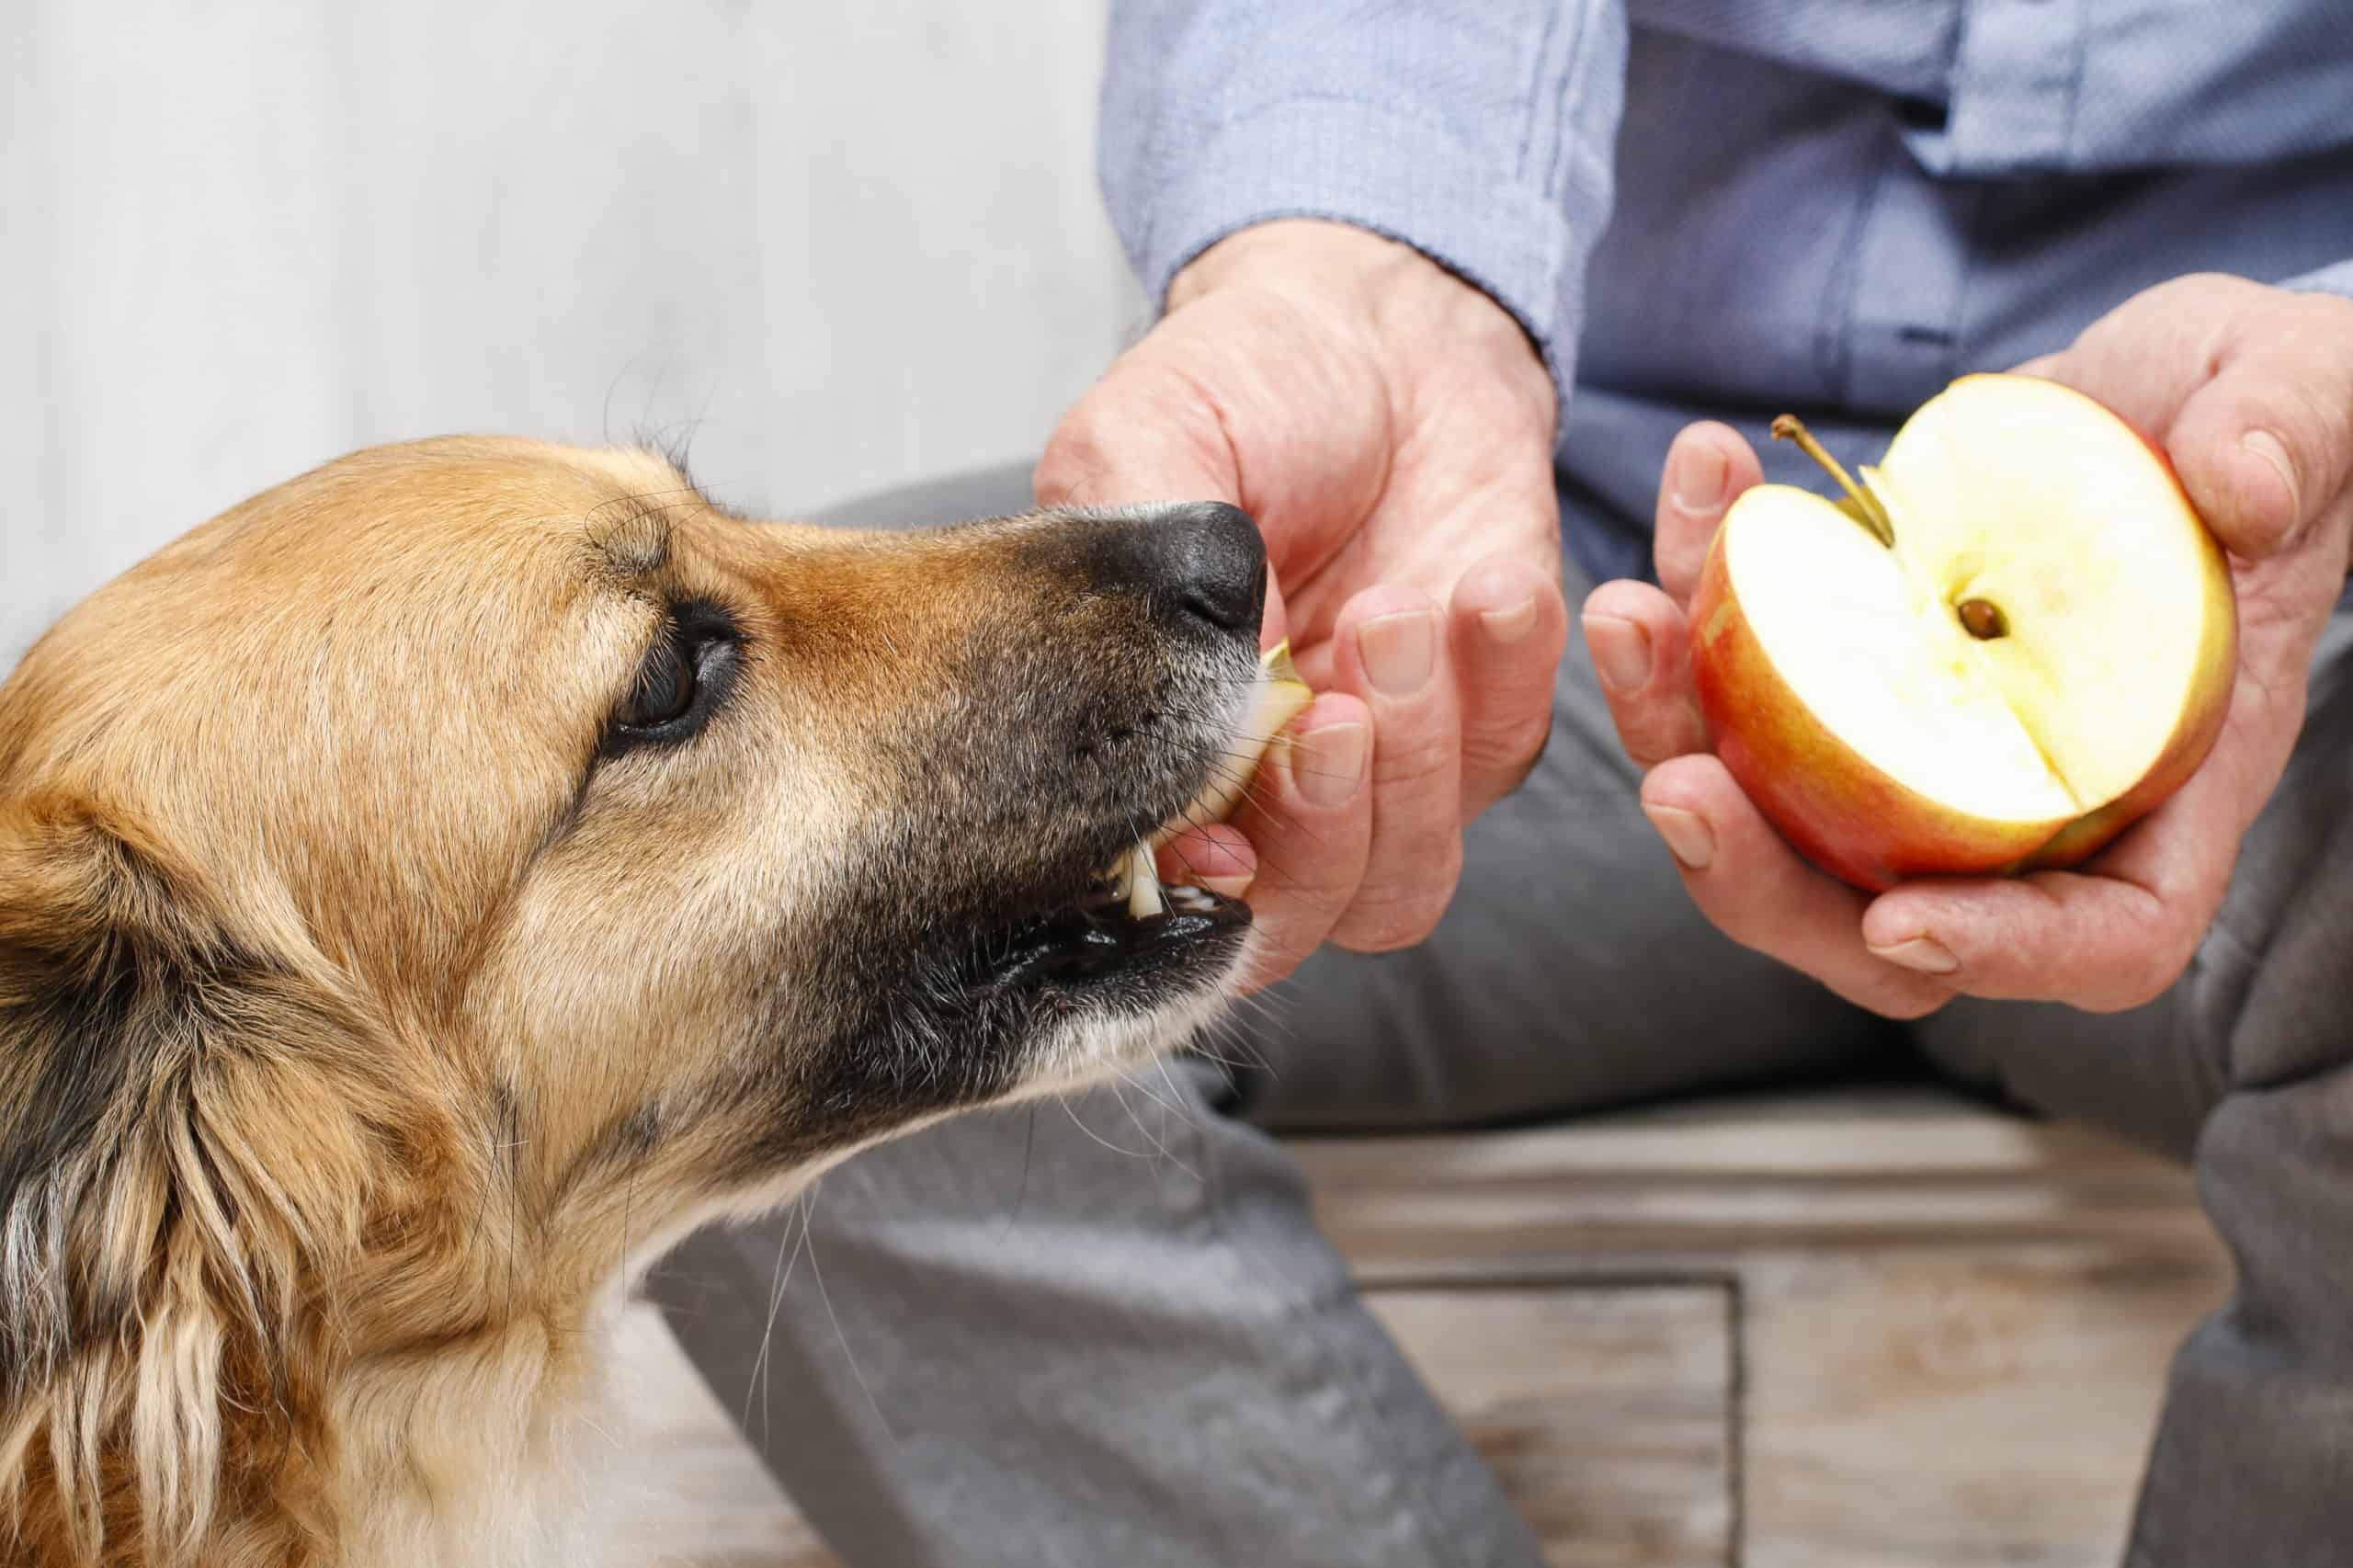 Man feeding his dog an apple